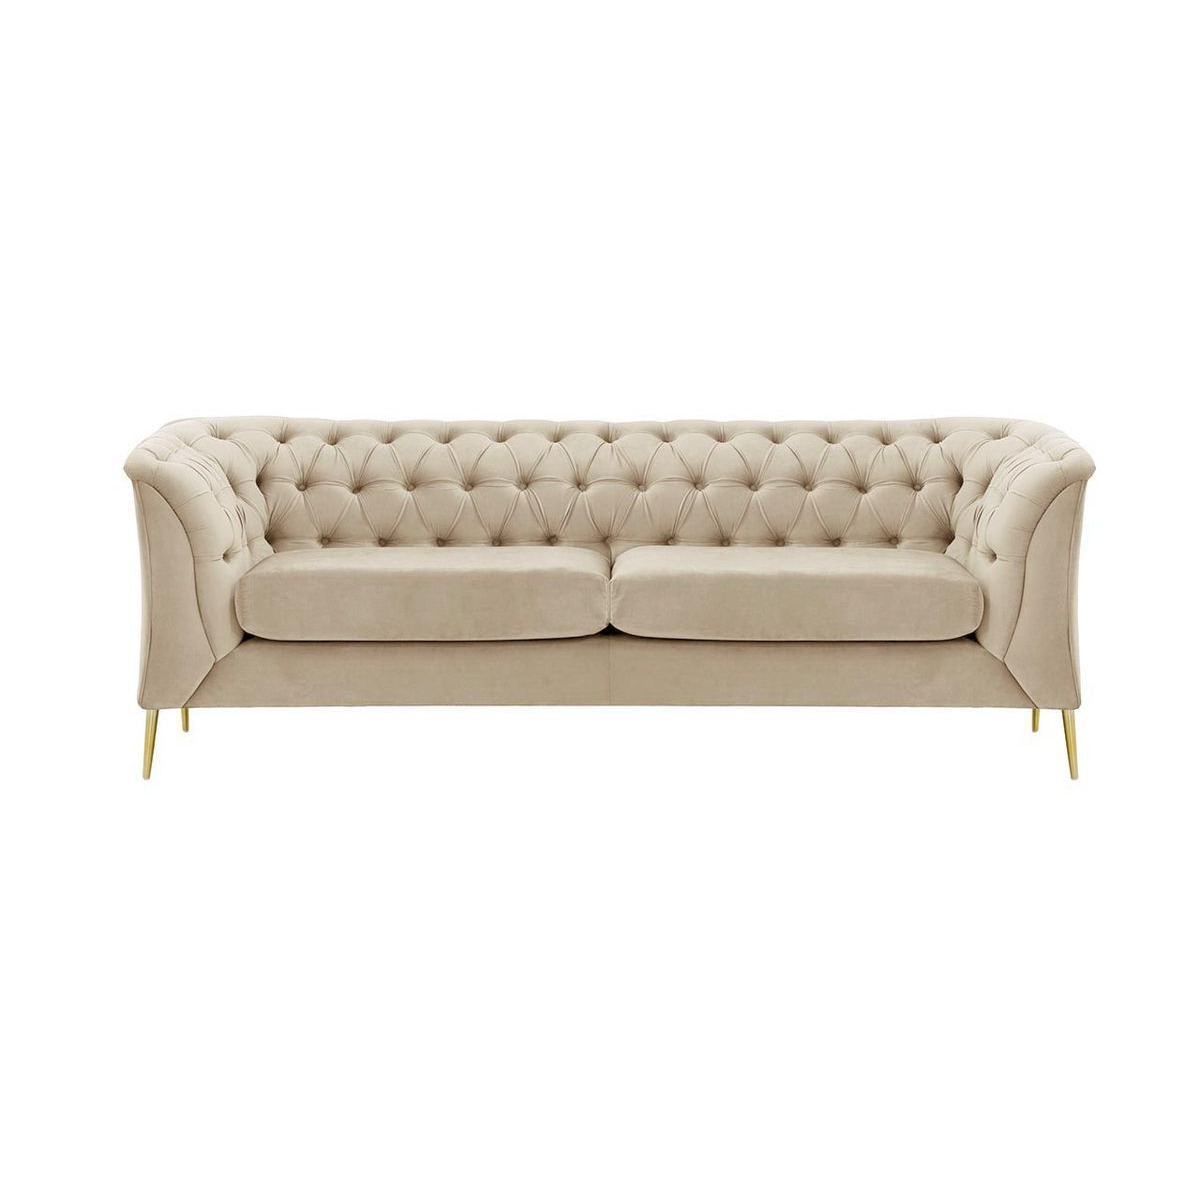 Chesterfield Modern 2,5 Seater Sofa, light beige, Leg colour: gold metal - image 1